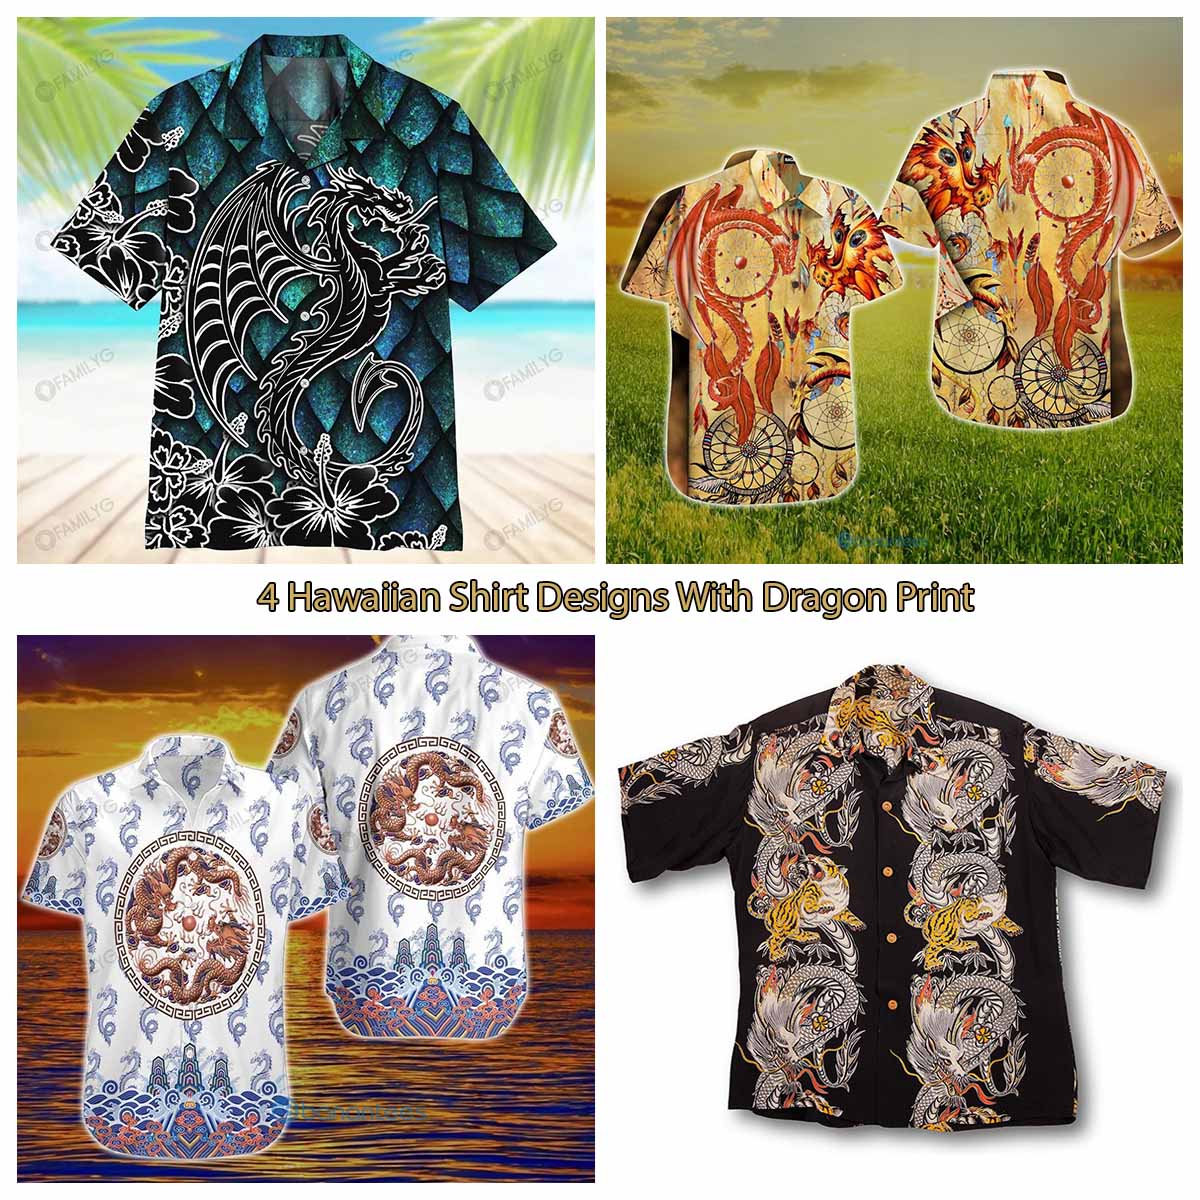 4 Hawaiian Shirt Designs With Dragon Print